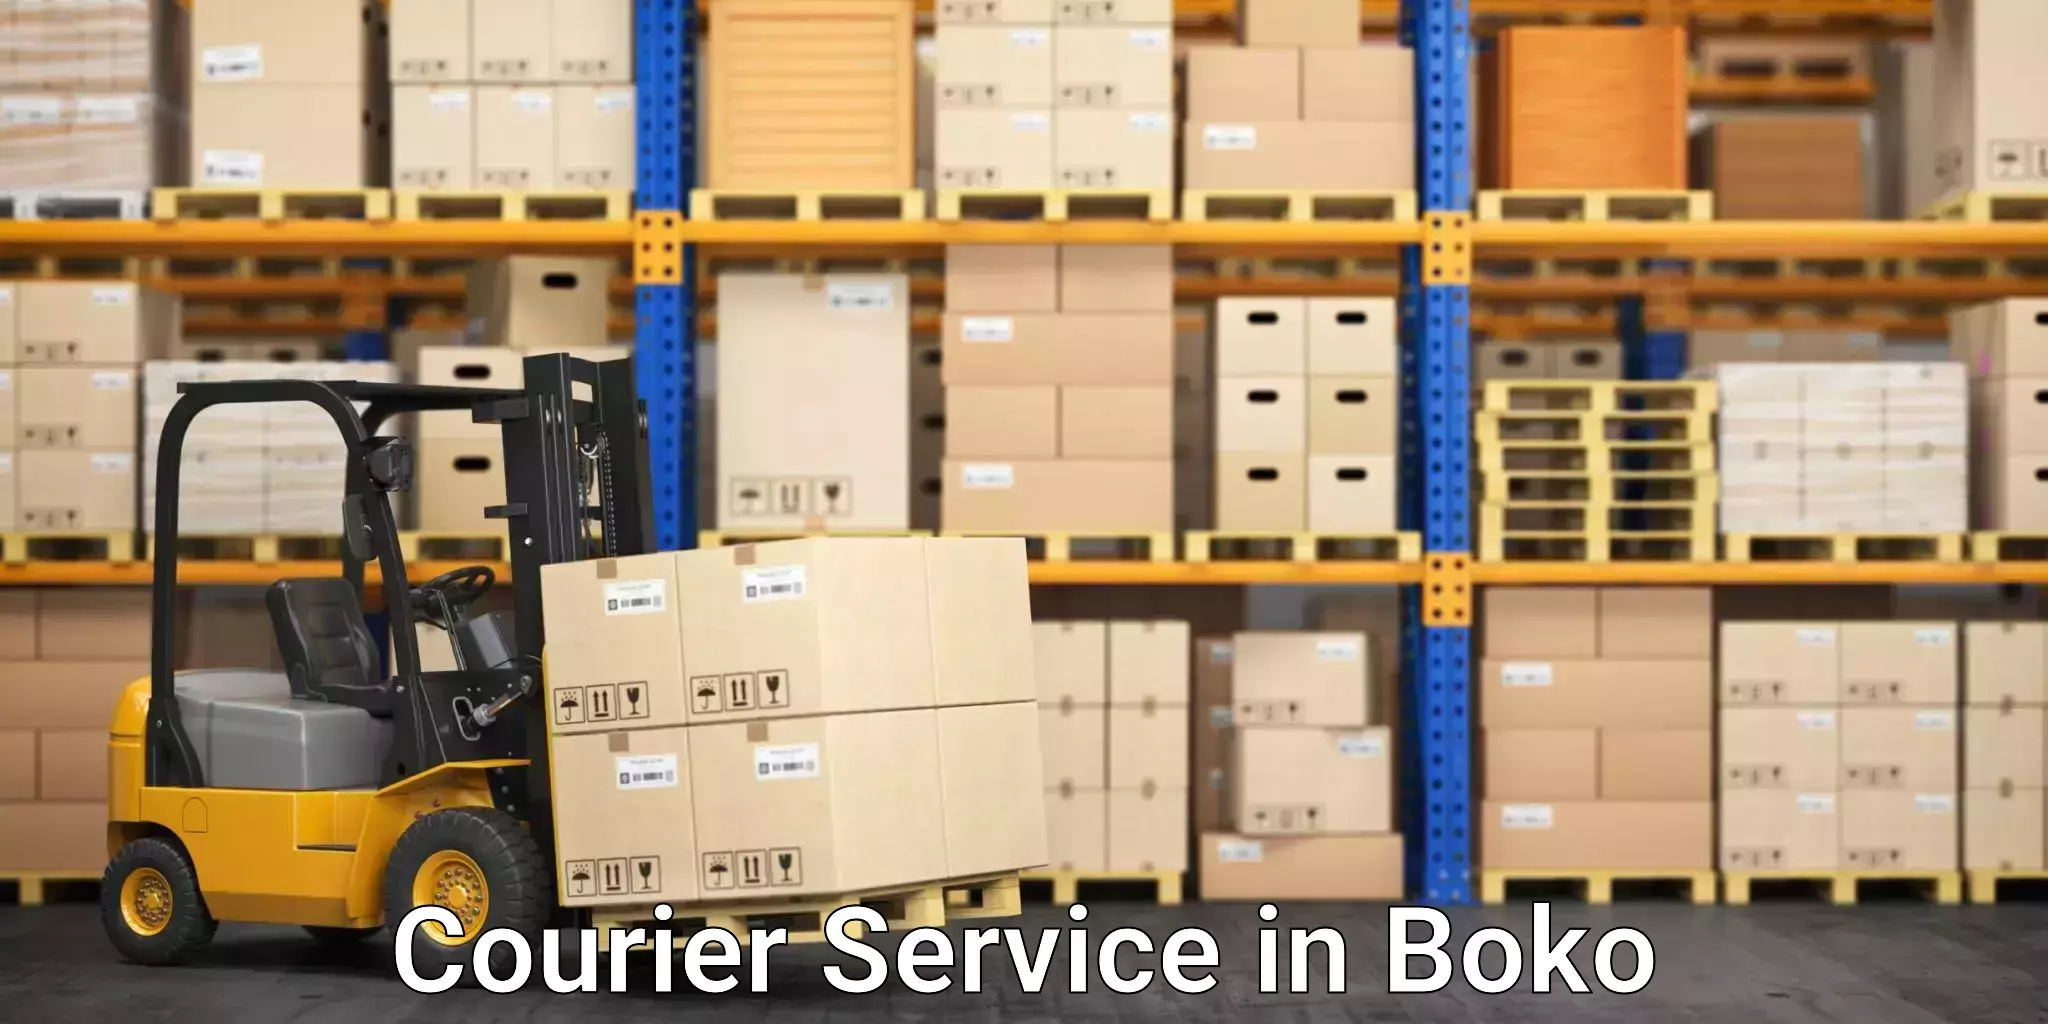 E-commerce shipping in Boko